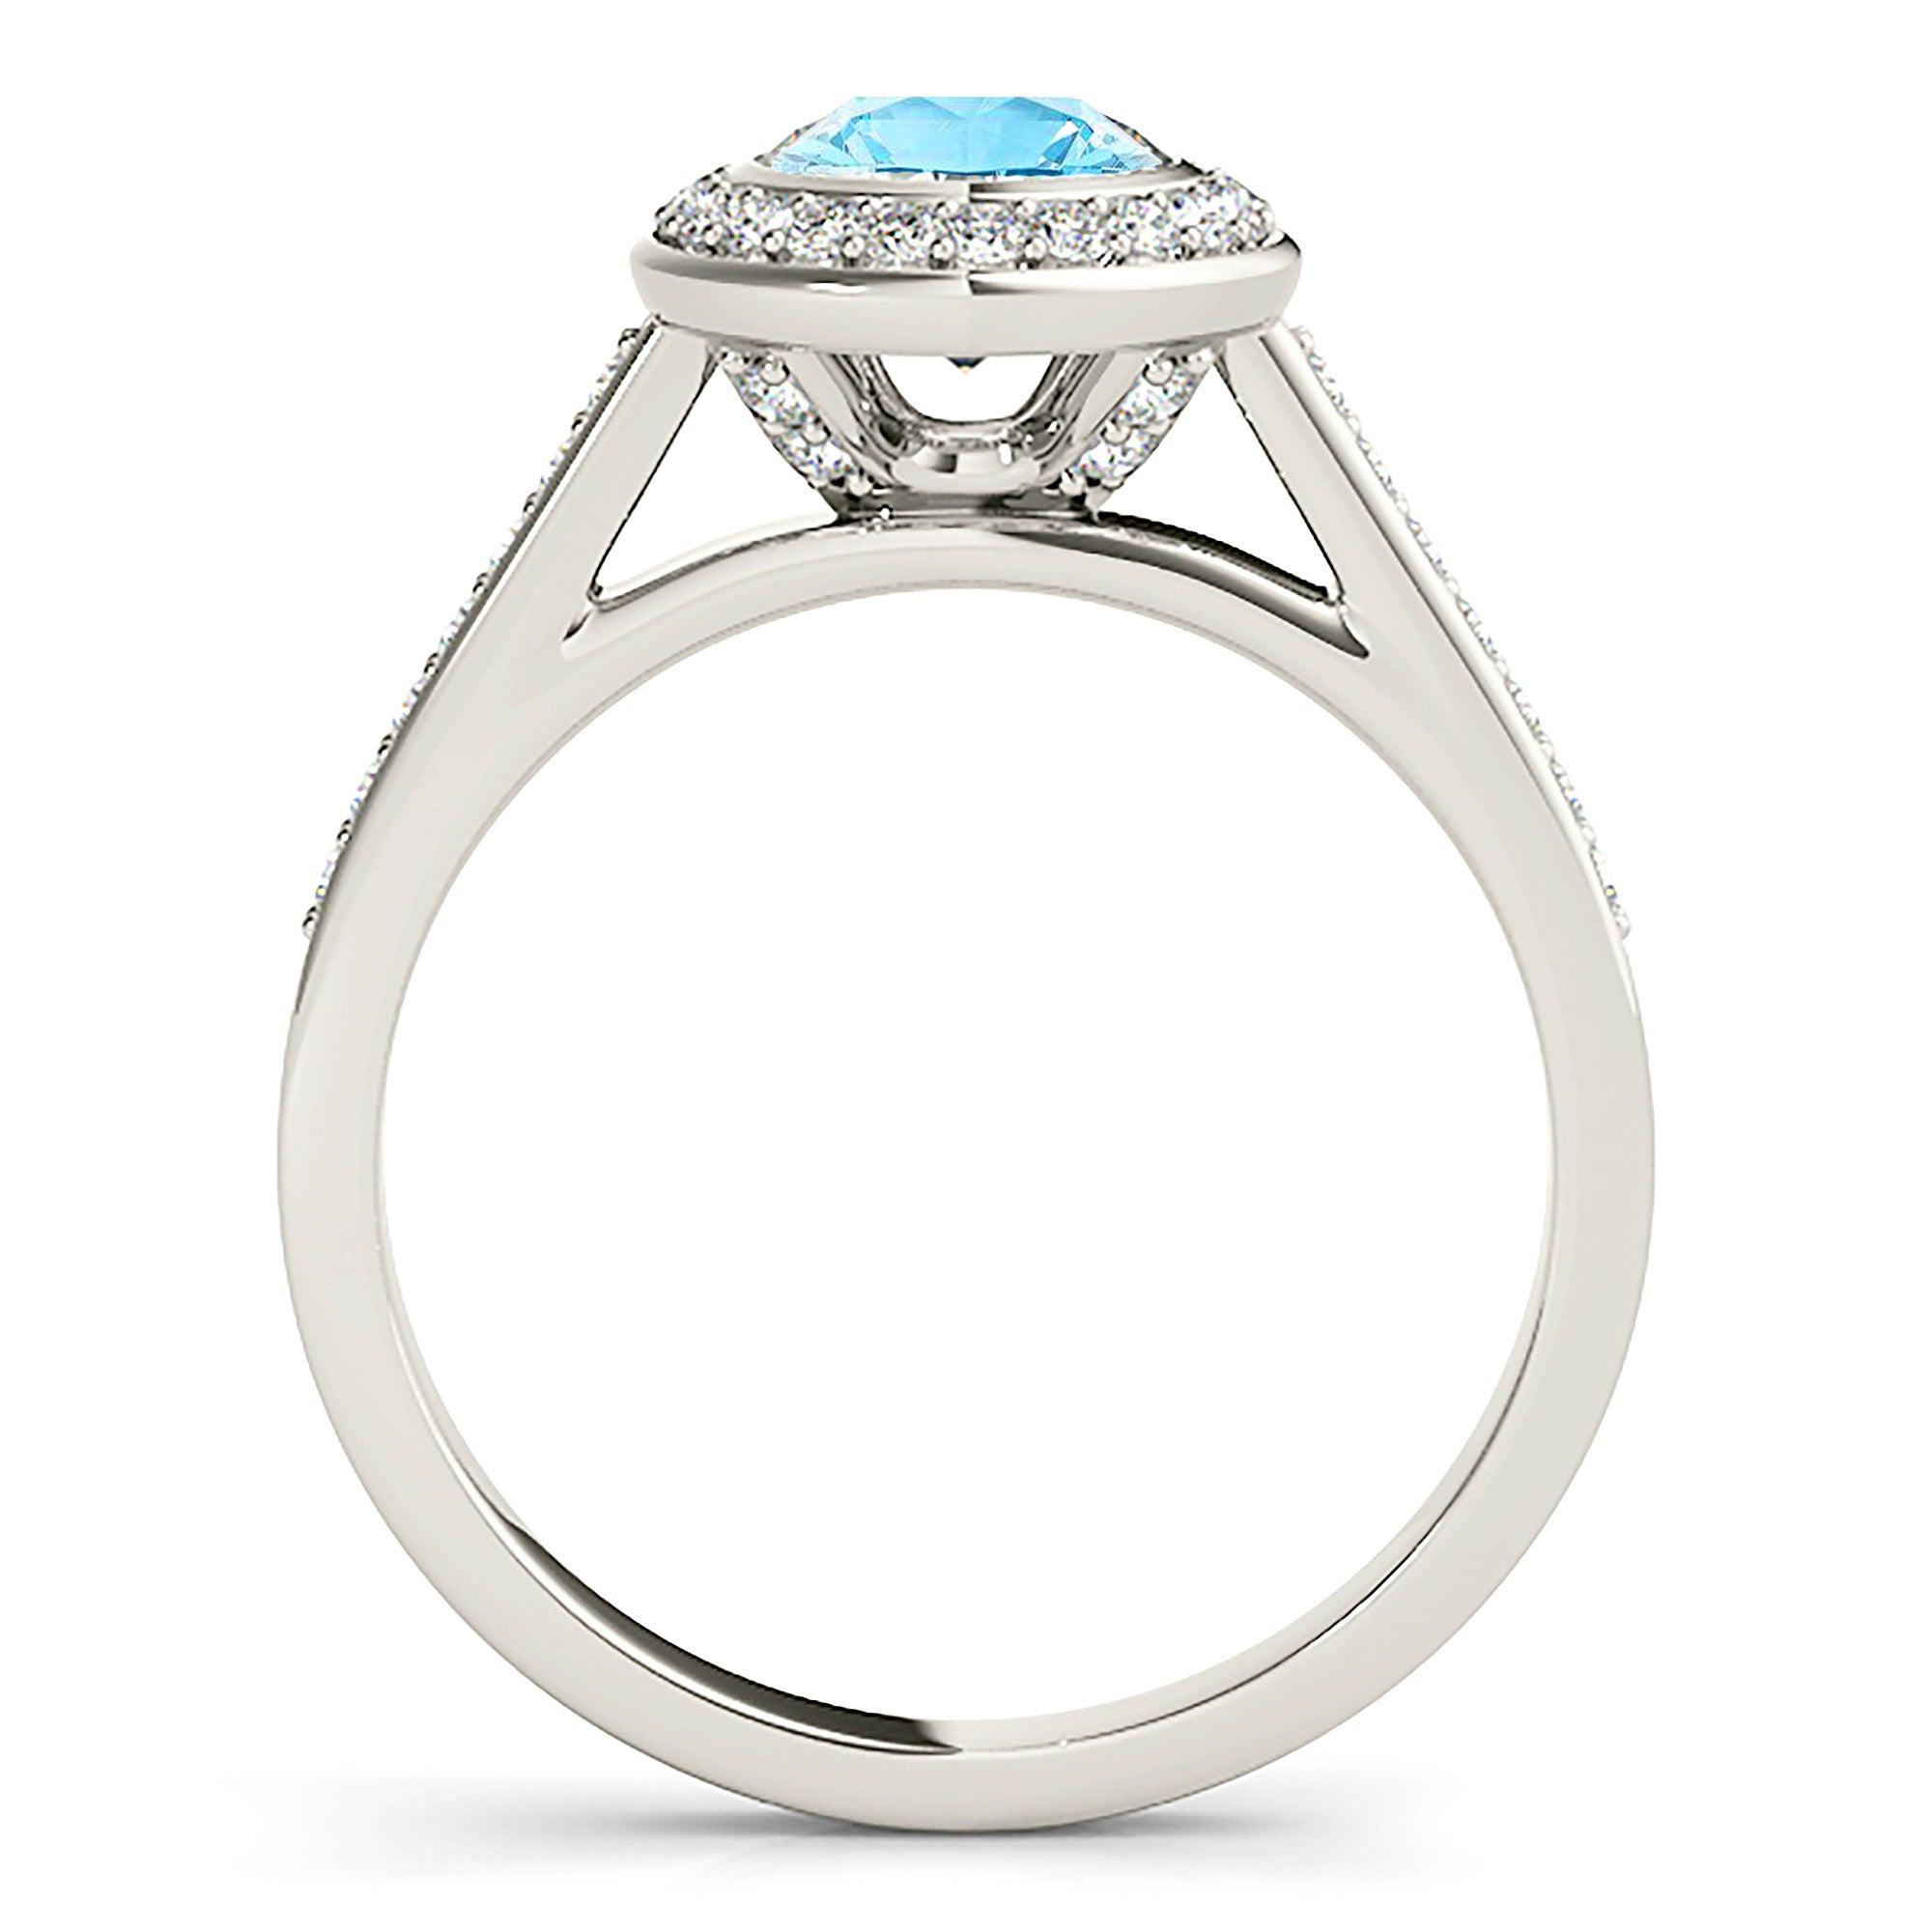 1.10 ct. Genuine Aquamarine Ring With 0.25 ctw. Diamond Bezel Set Halo and Delicate Diamond Band | Round Blue Aquamarine Halo Ring-in 14K/18K White, Yellow, Rose Gold and Platinum - Christmas Jewelry Gift -VIRABYANI